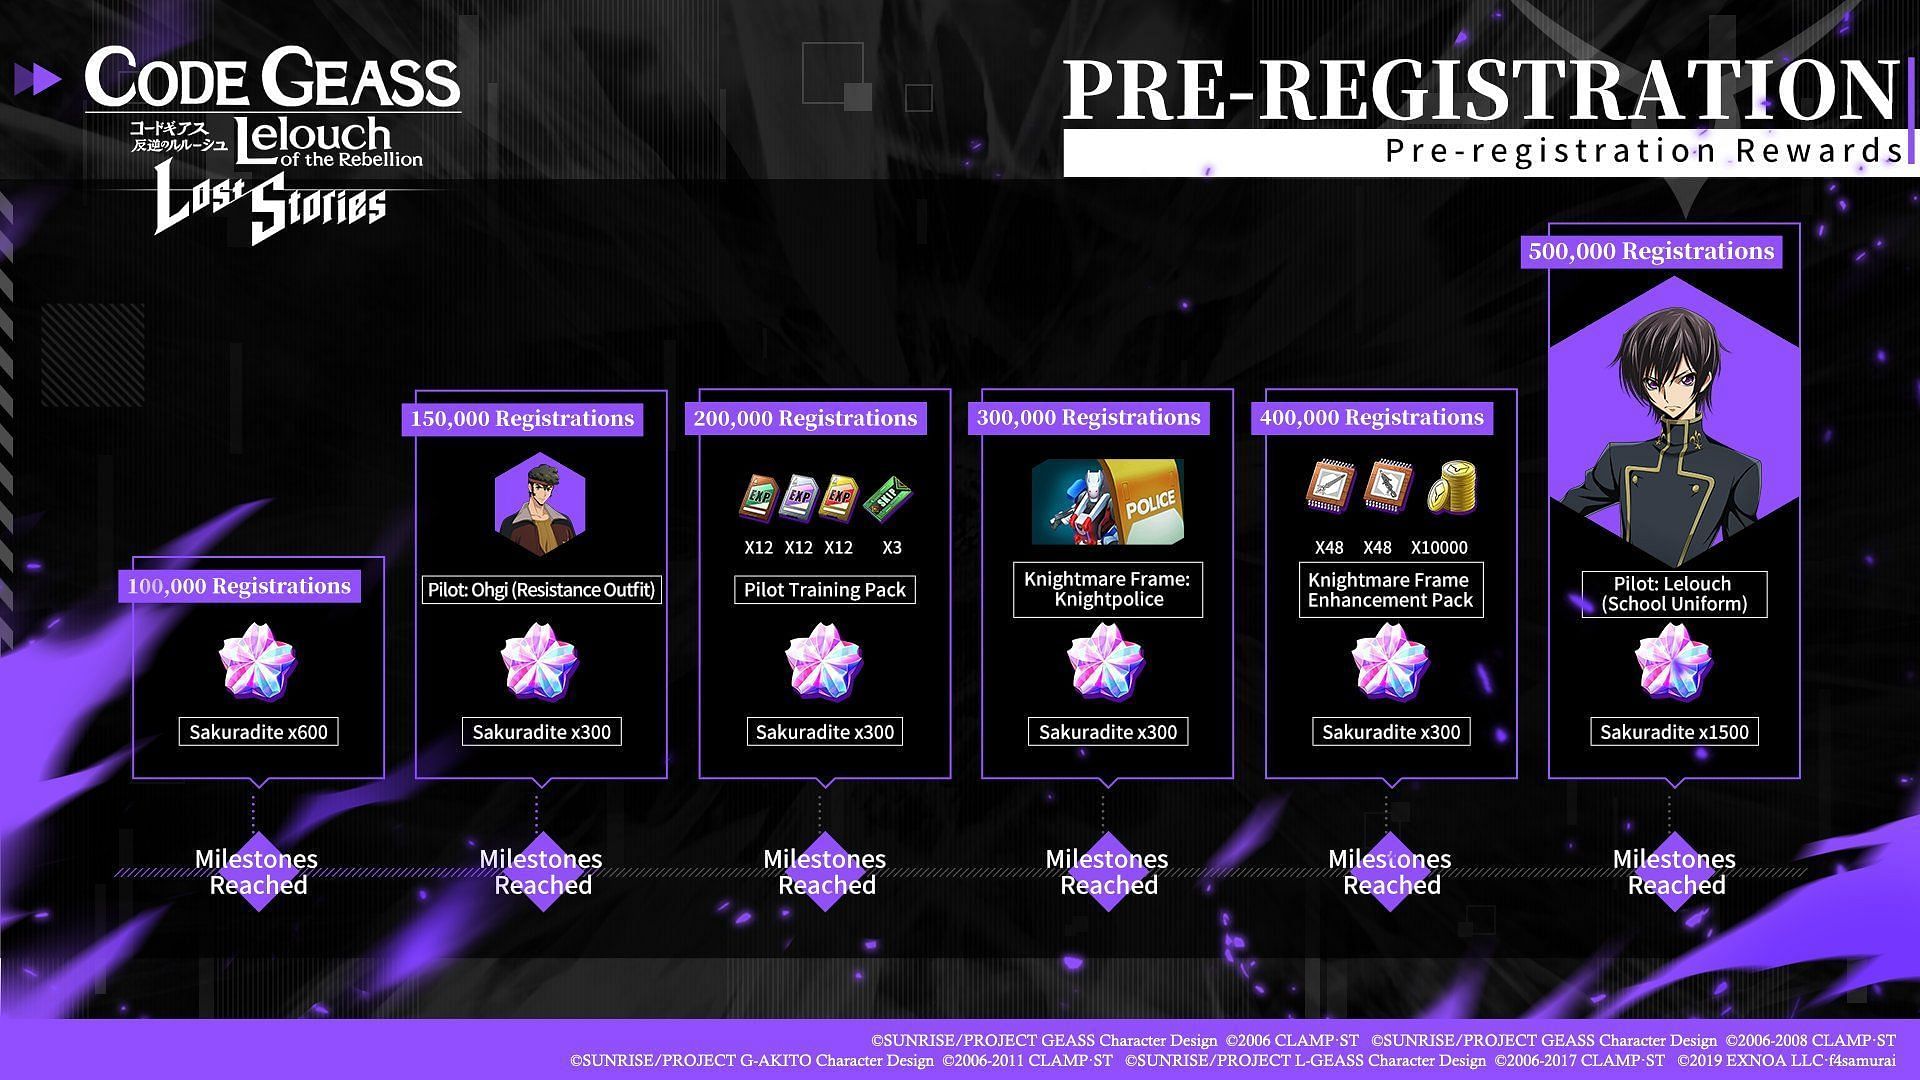 Pre-registration milestones and rewards for Lost Stories. (Image via Komoe Games)